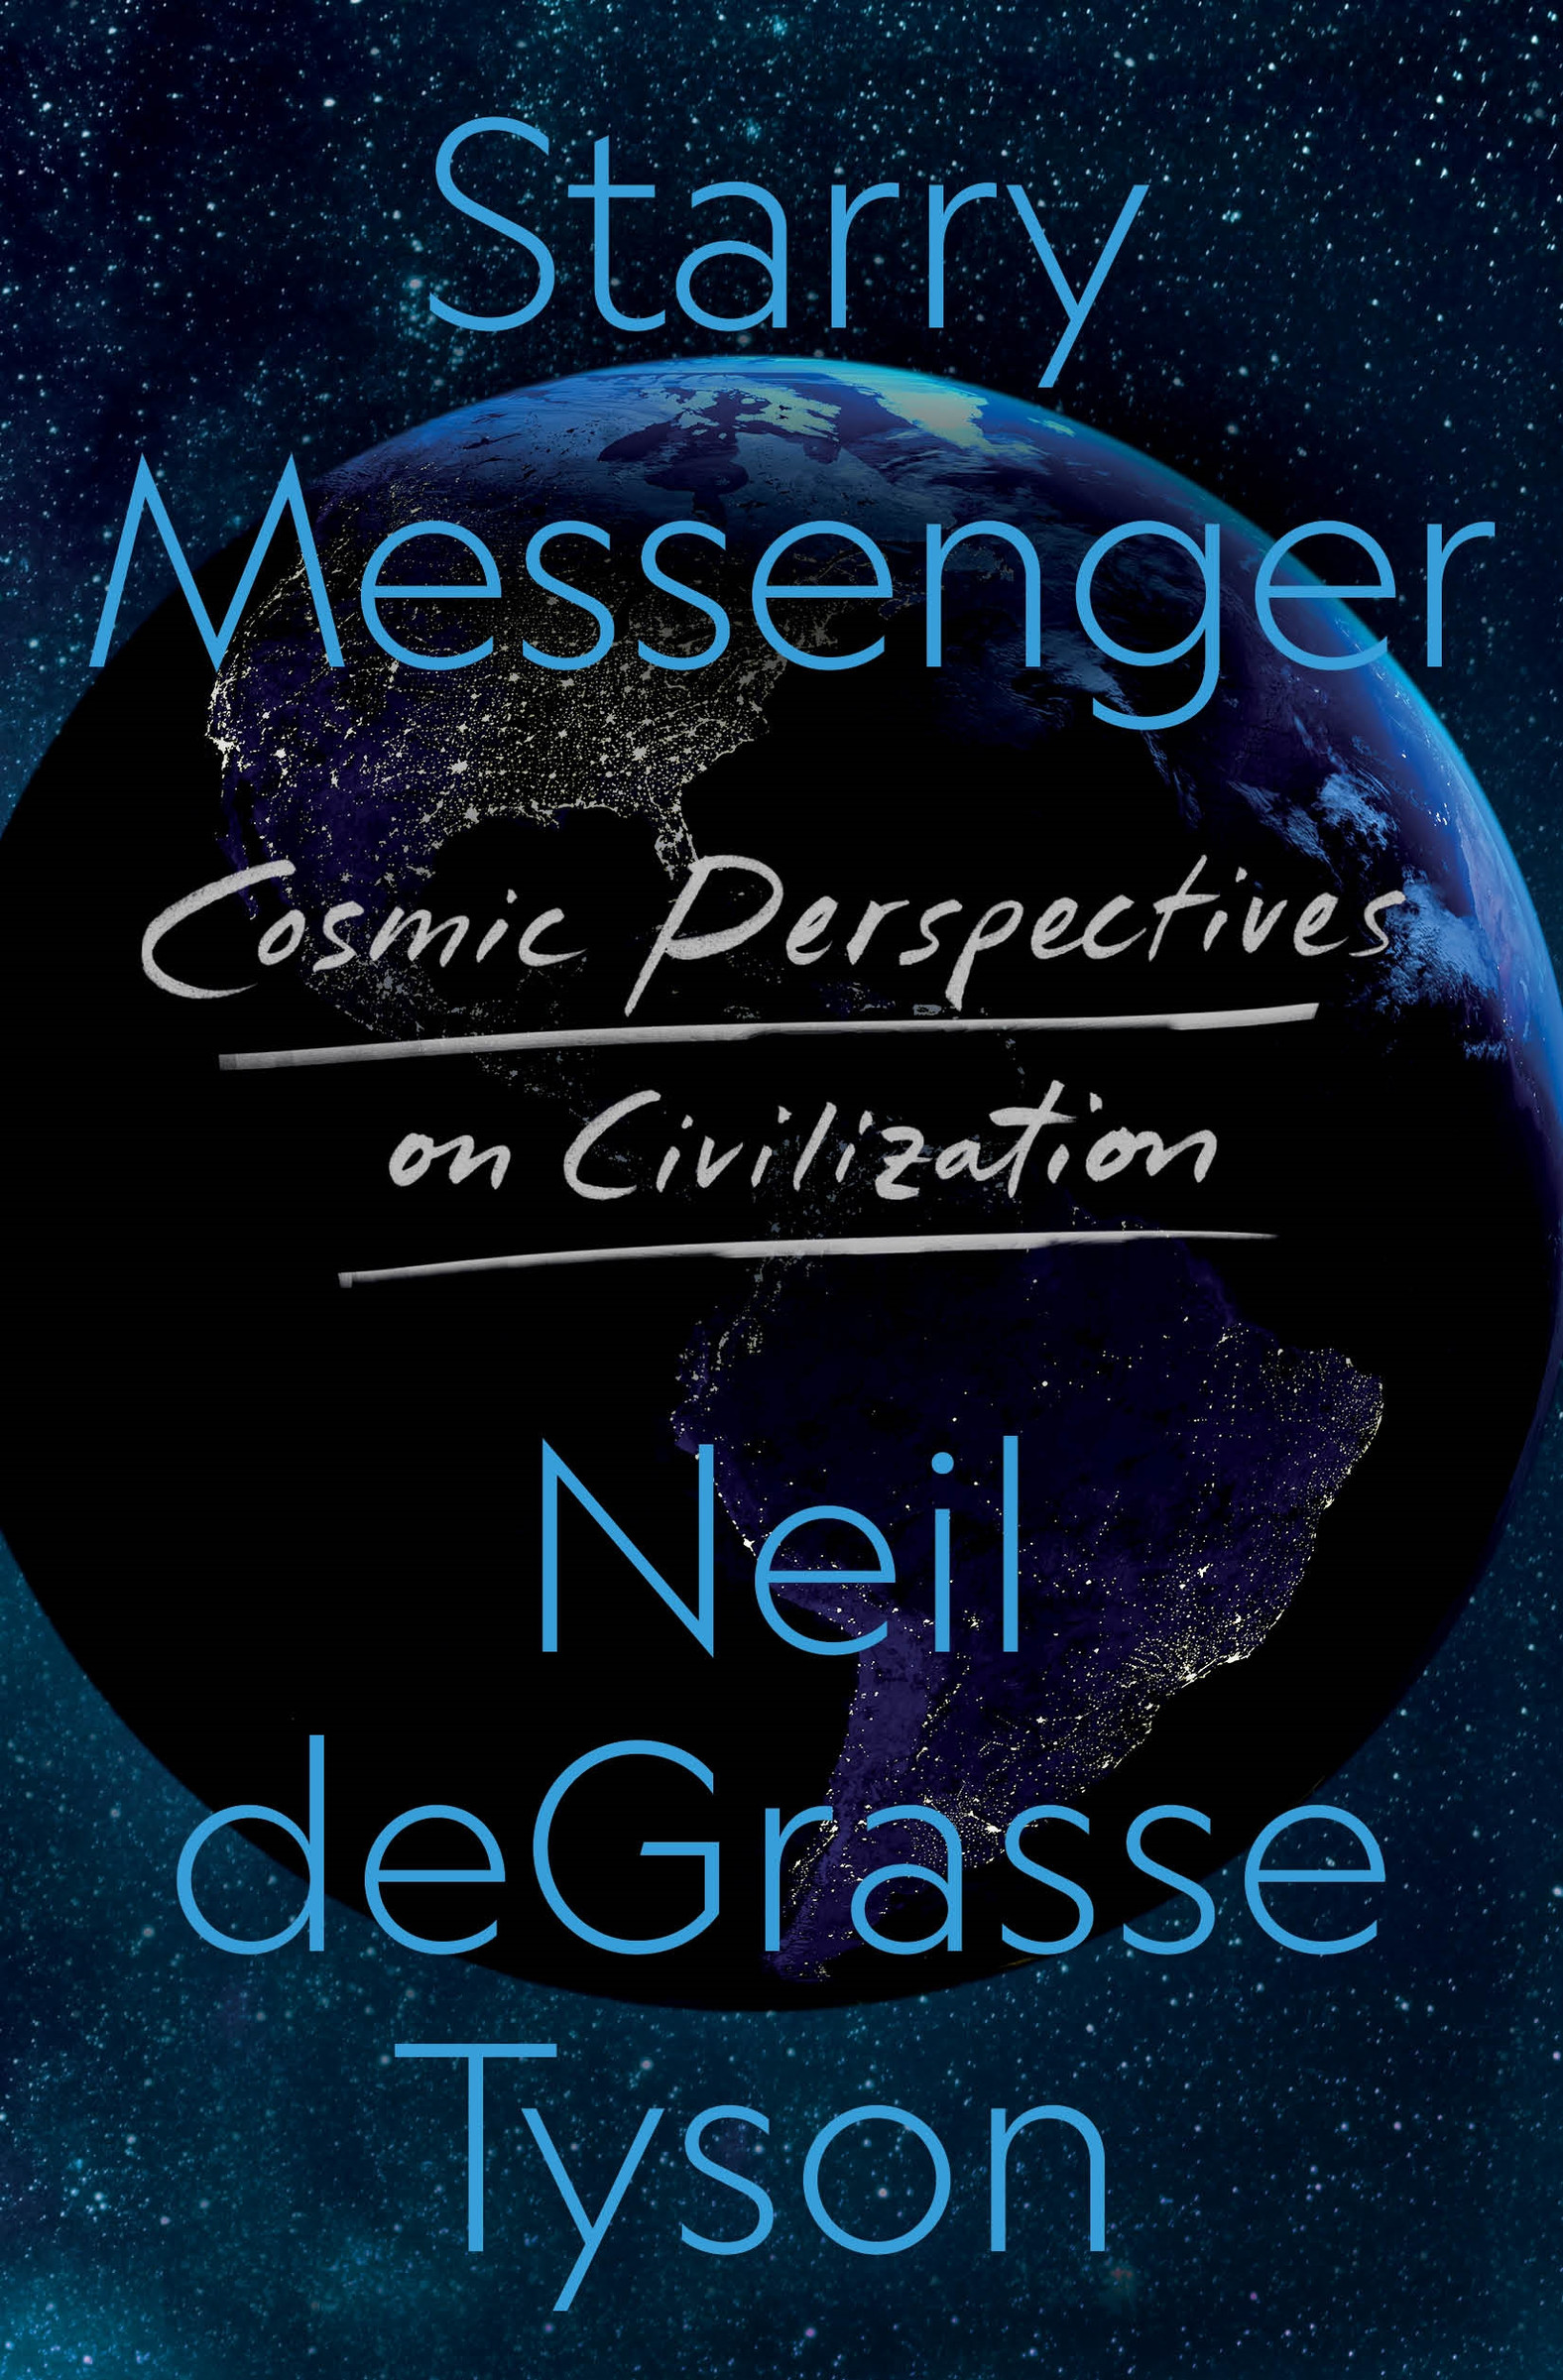 Starry Messenger : Cosmic Perspectives on Civilization | Tyson, Neil deGrasse